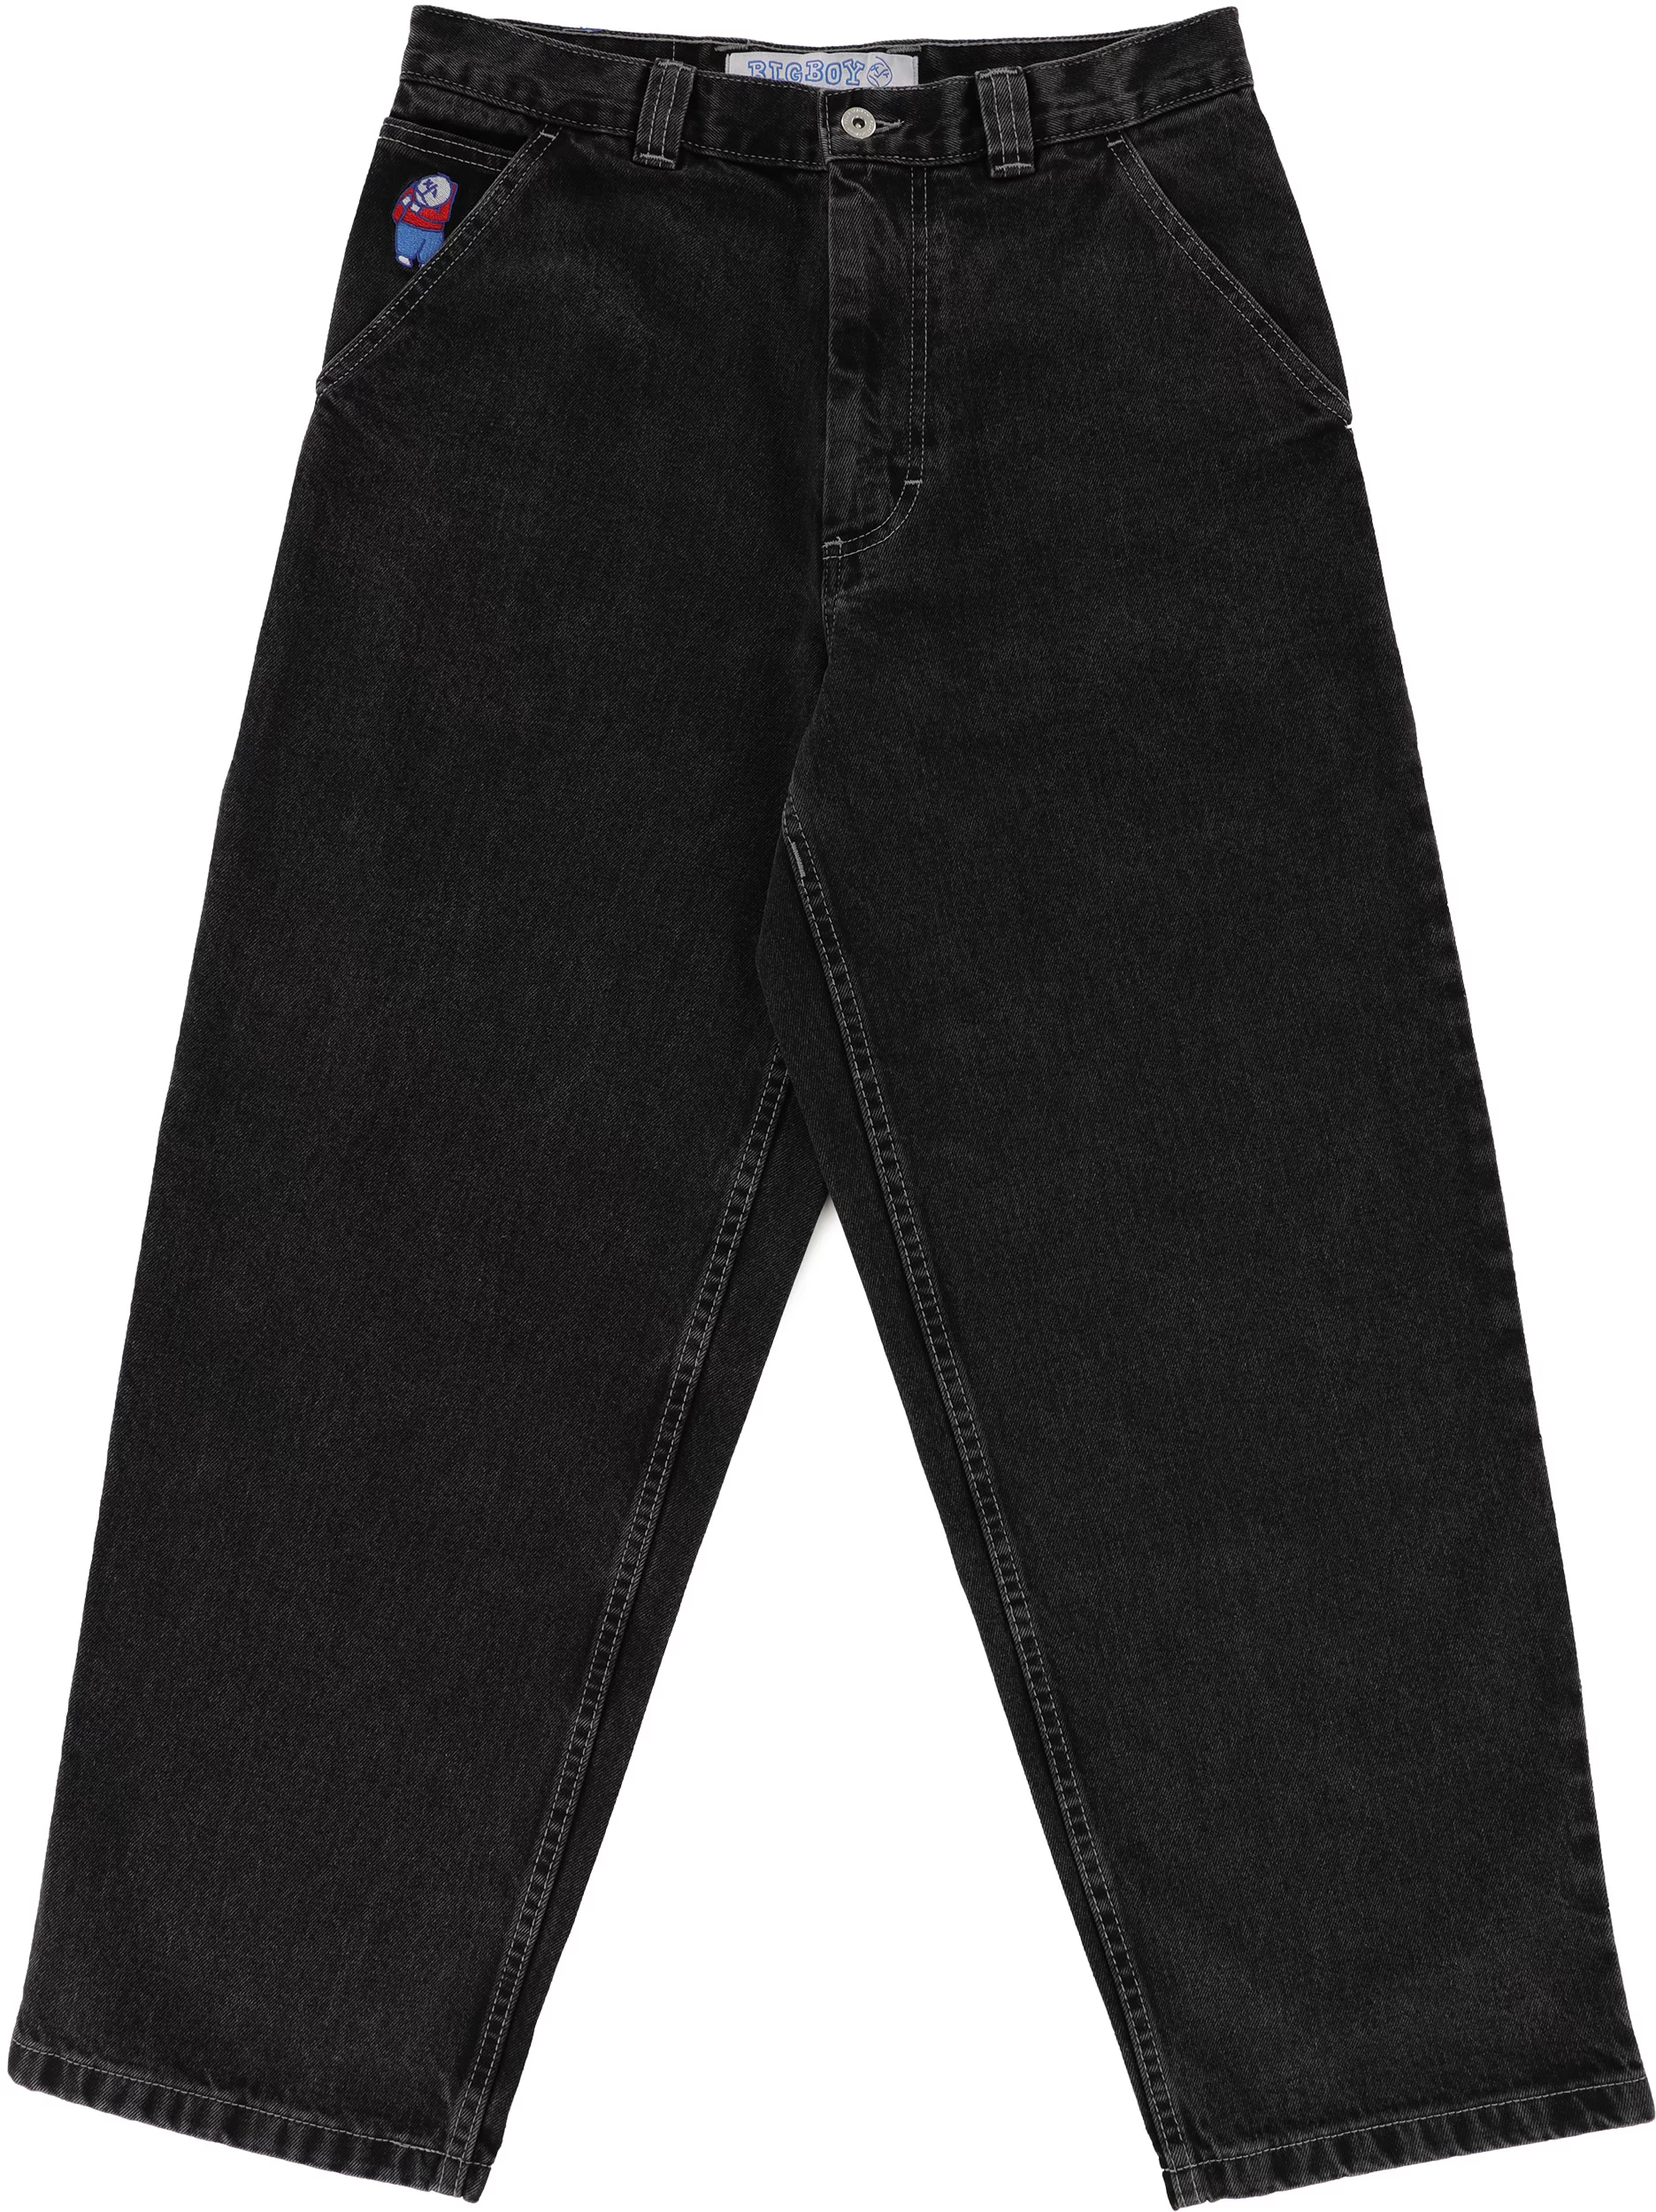 L Polar Skate Co Big Boy Jeans blackサイズL - デニム/ジーンズ